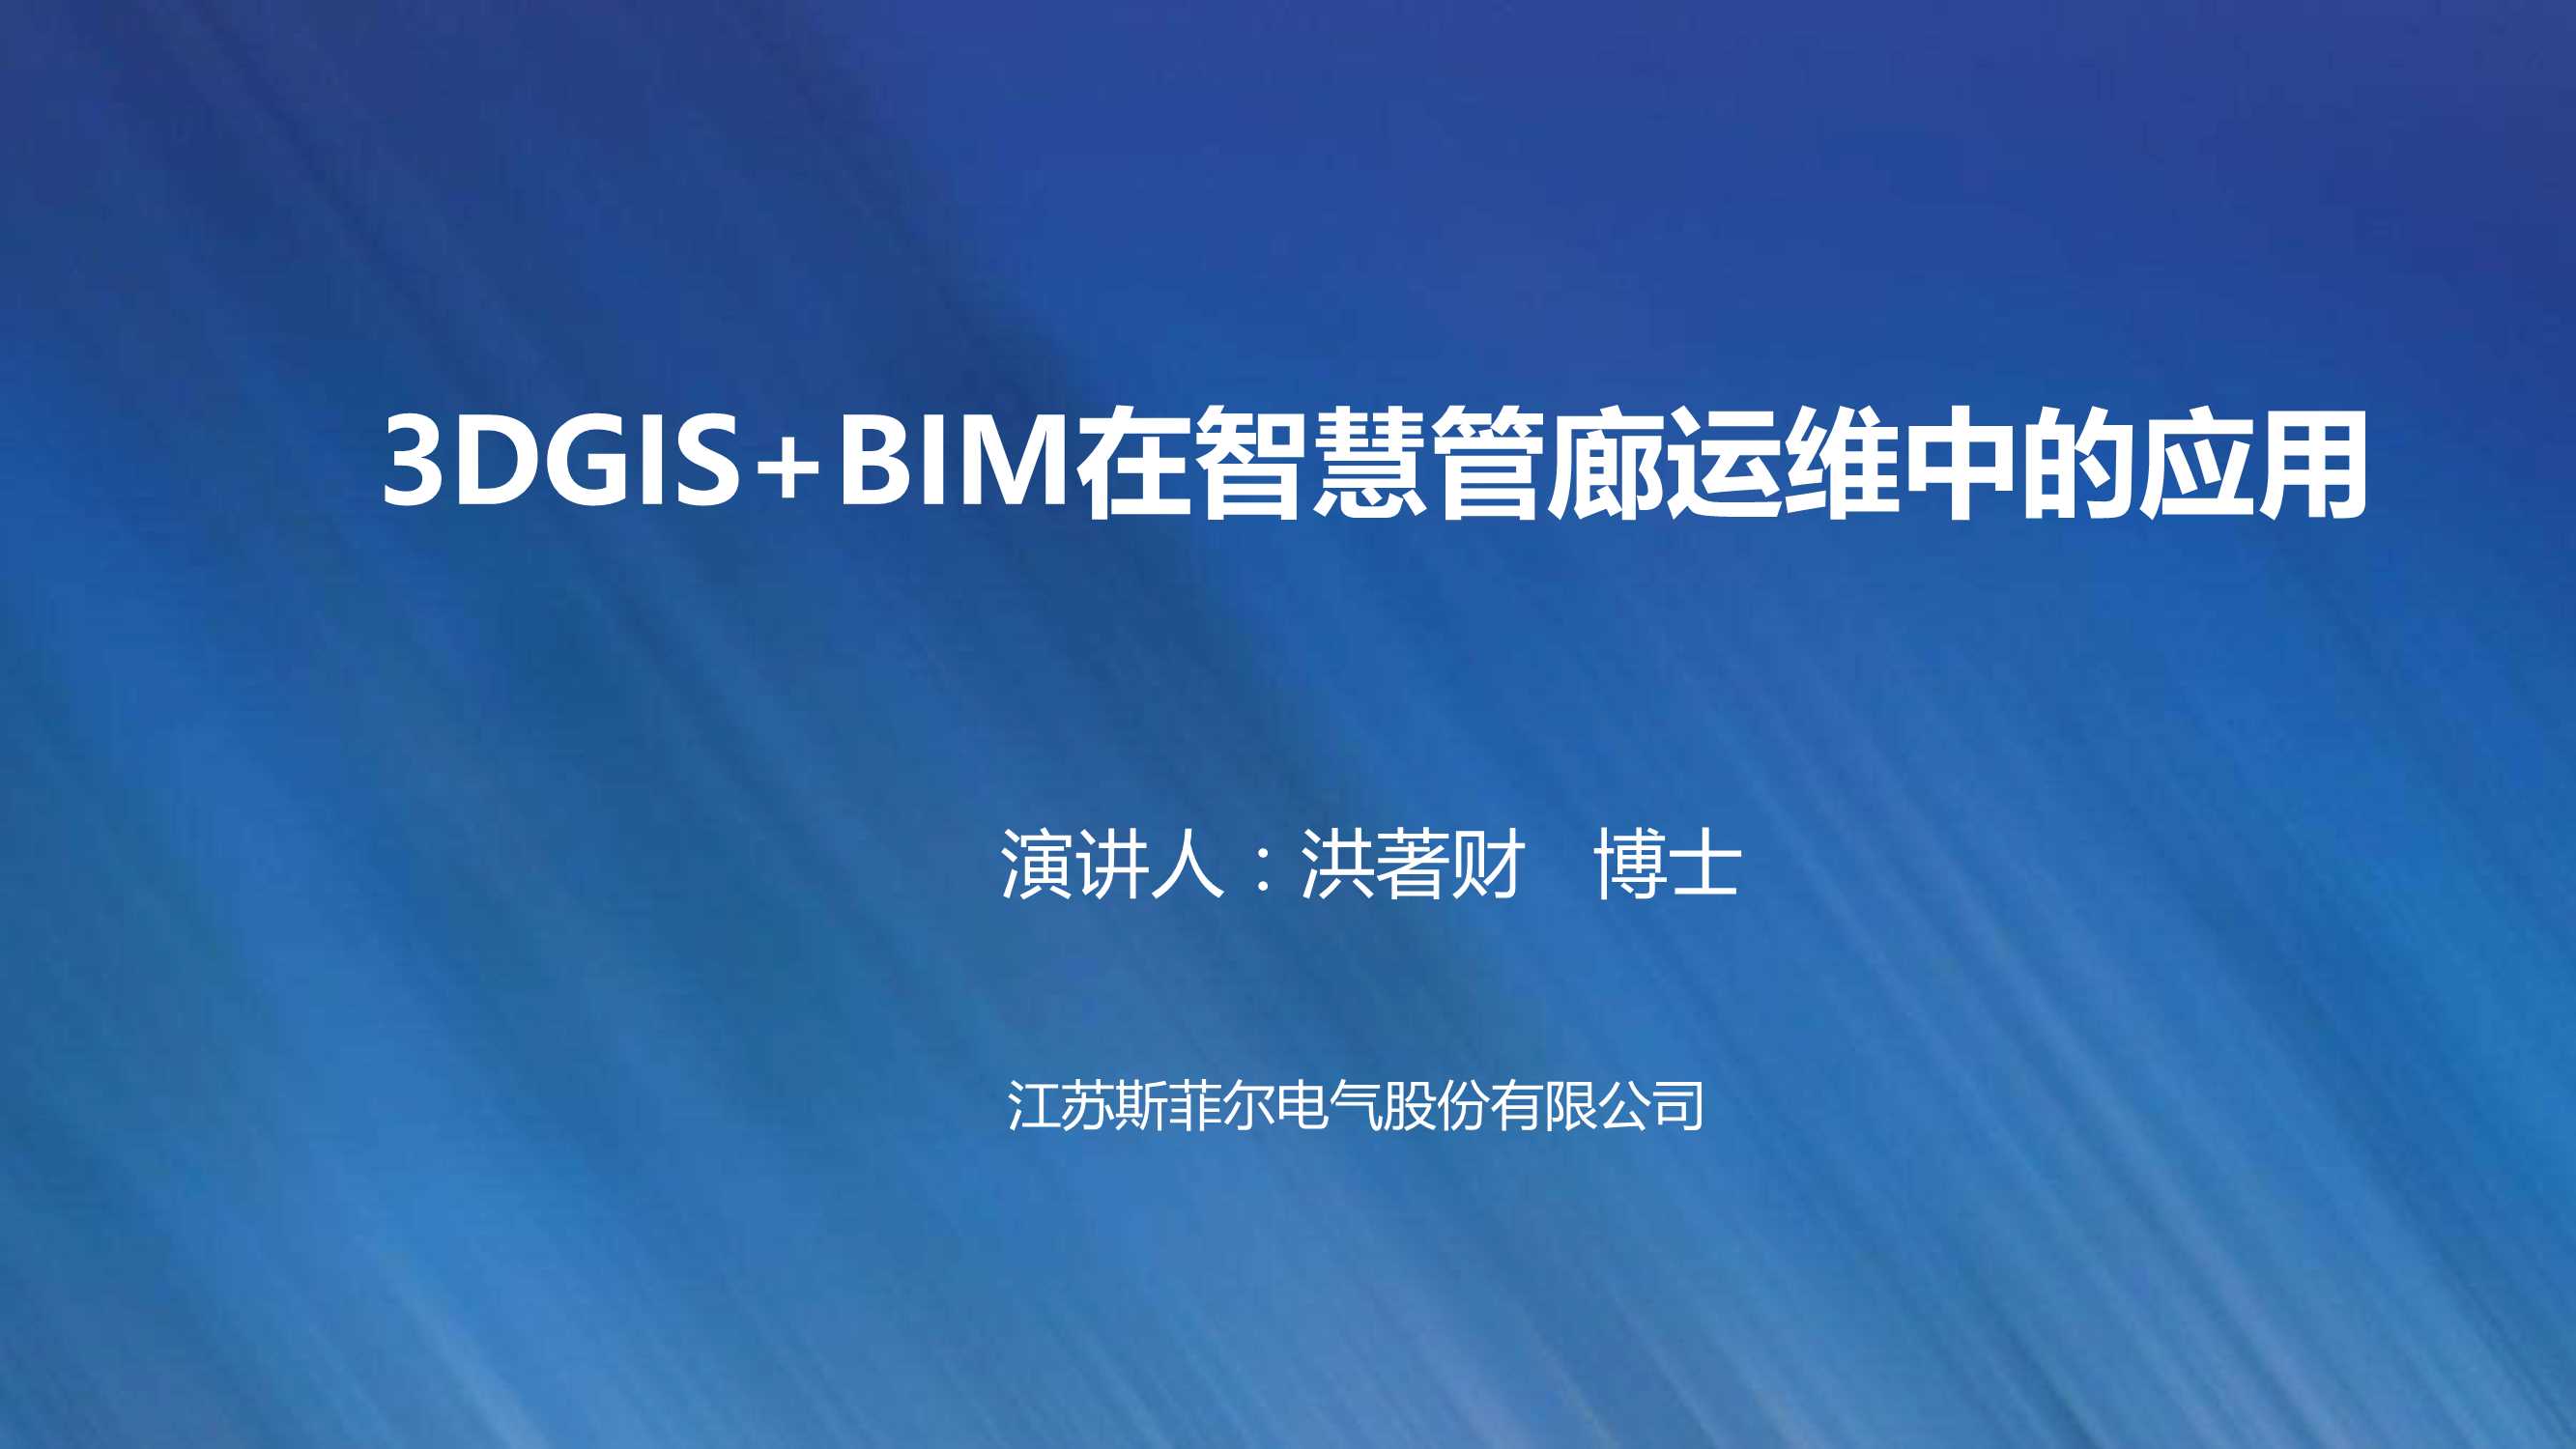 3DGIS BIM在智慧管廊运维中的应用-2017.11-22页